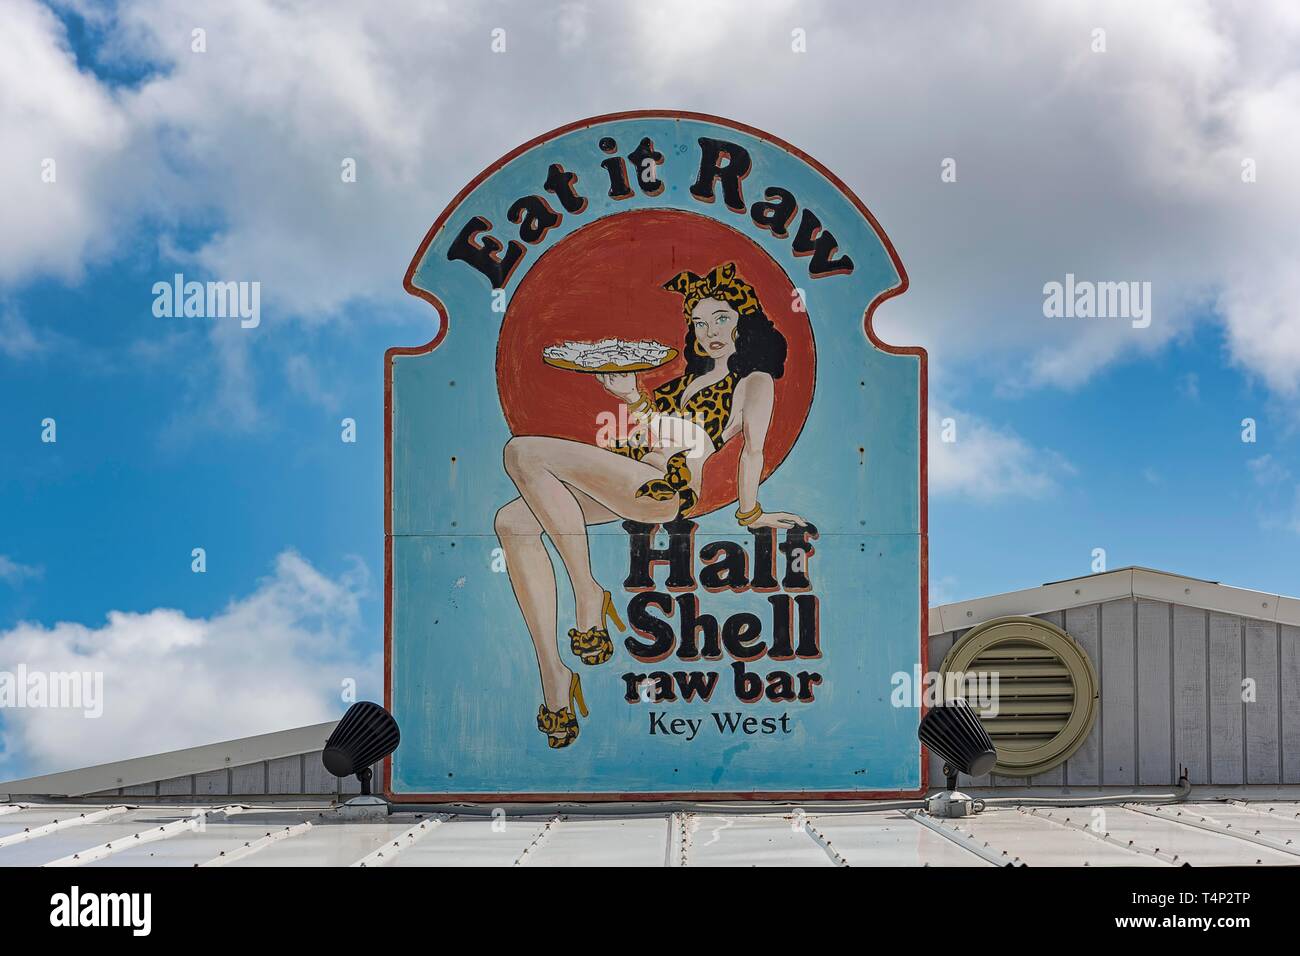 Half Shell Raw Bar, fruits de mer Restaurant, Key West, Floride, USA Banque D'Images